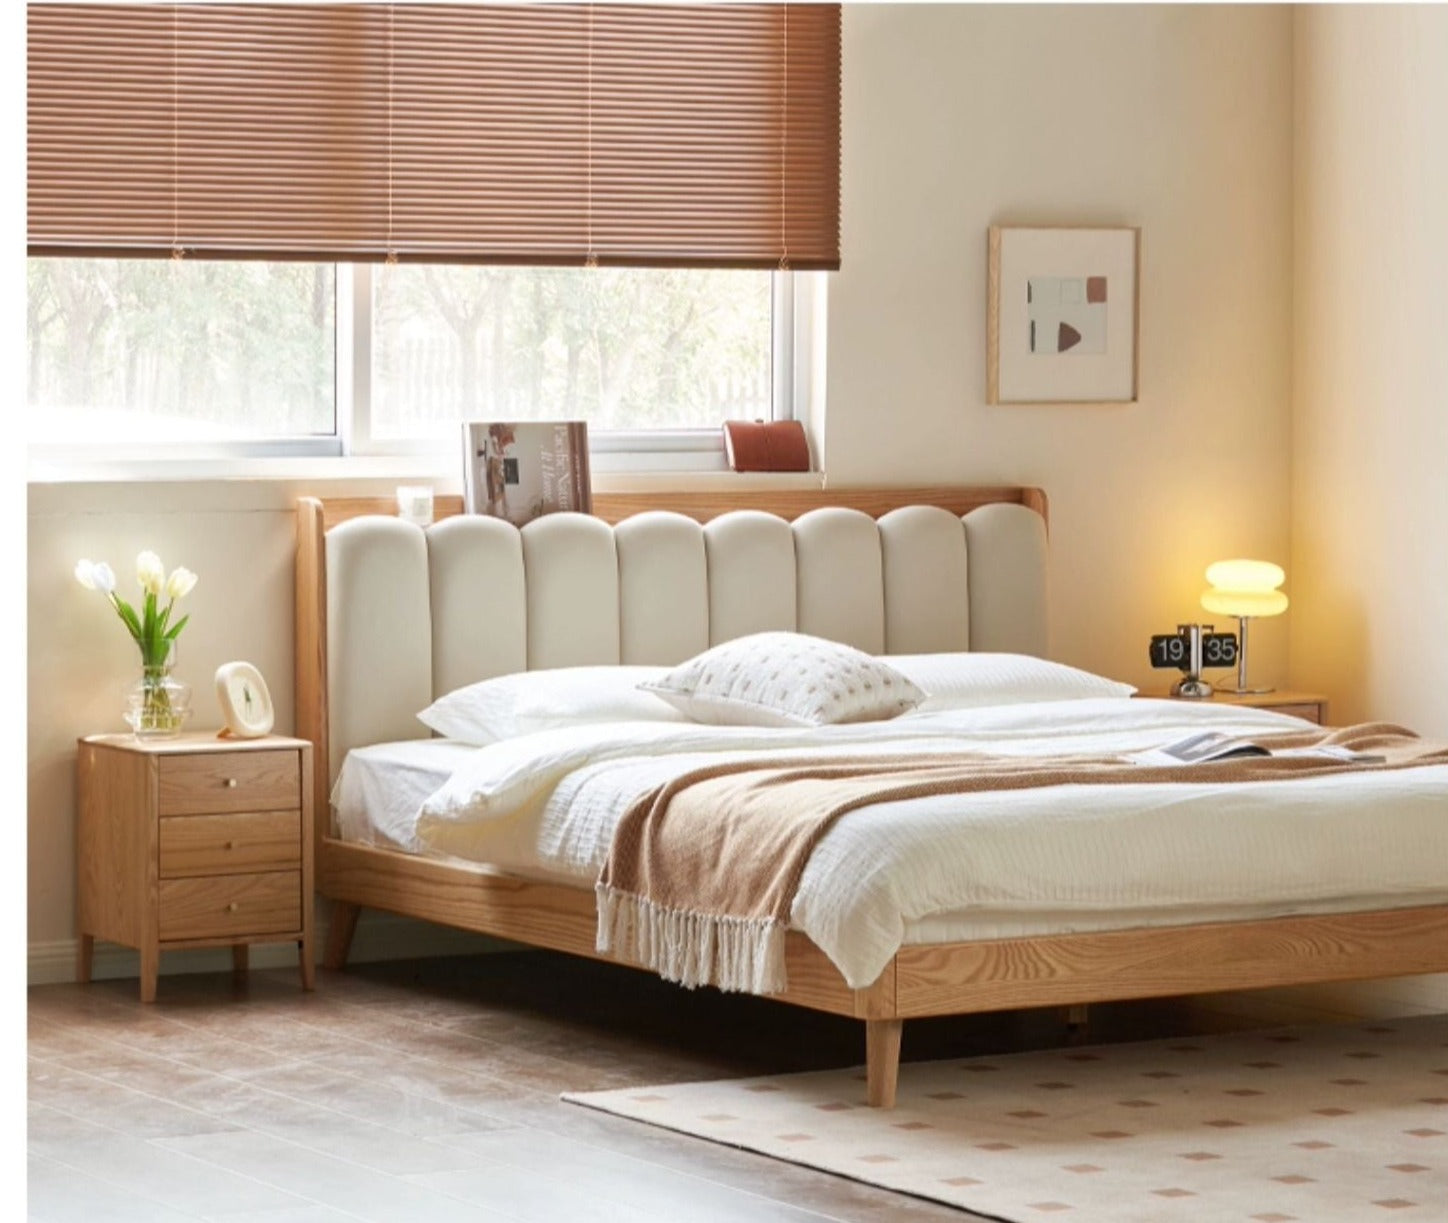 Oak solid wood soft-packe, piano key bed"